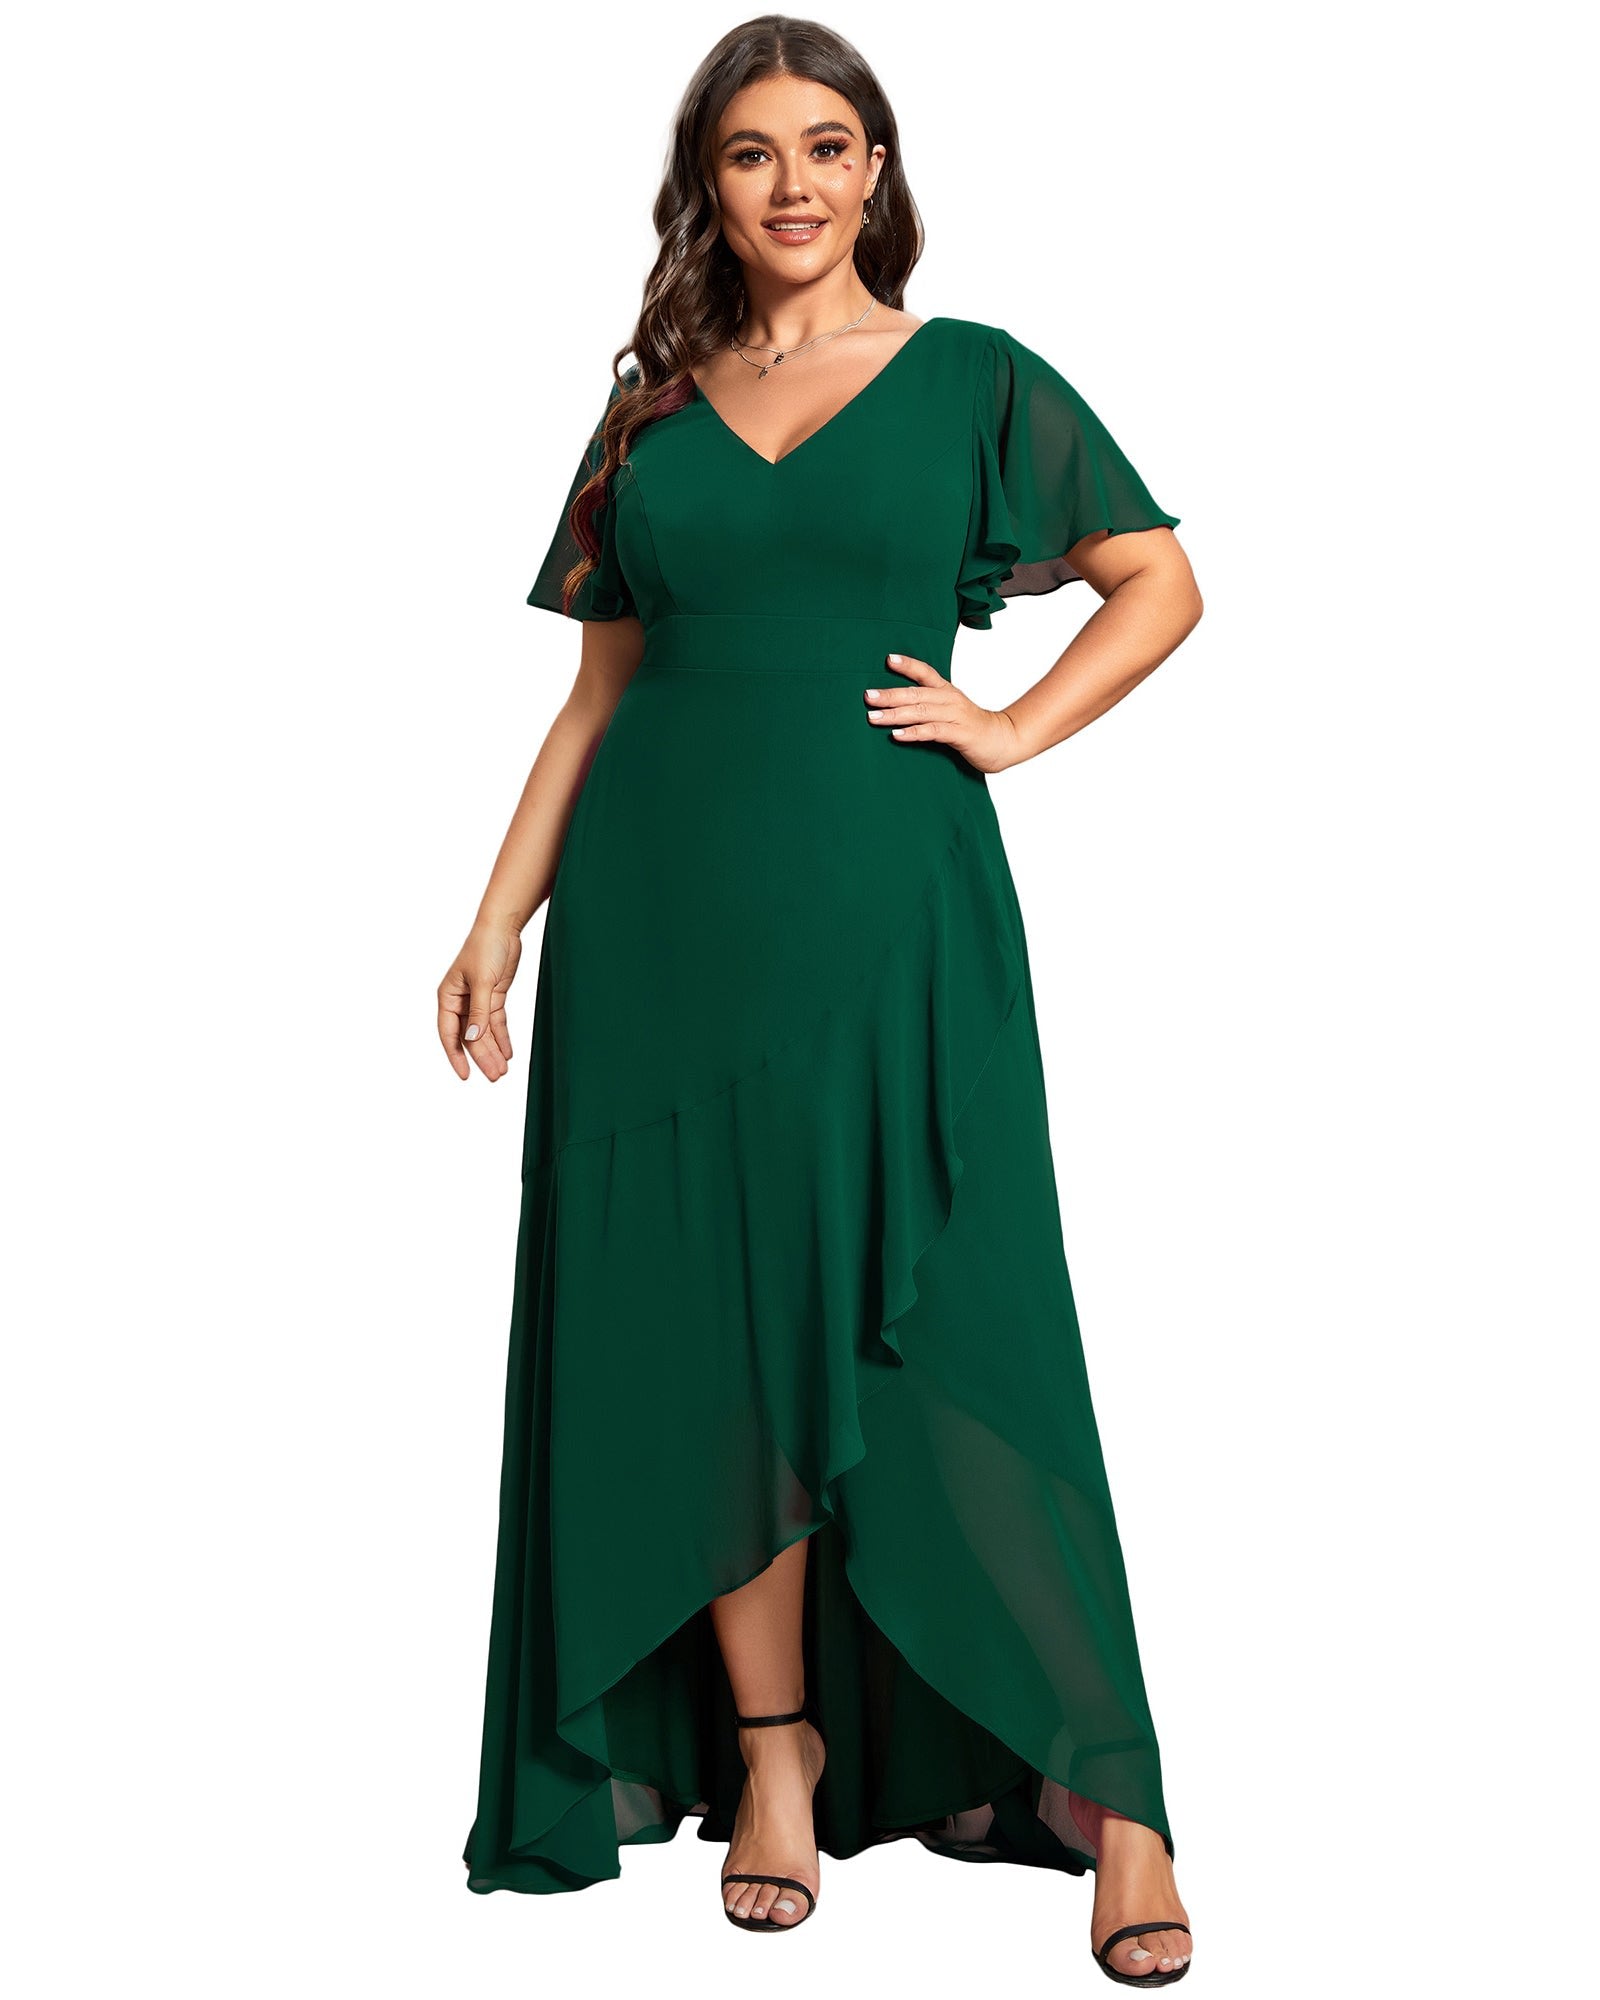 Charming Chiffon Bridesmaid Dress with Lotus Leaf Hemline | Dark Green